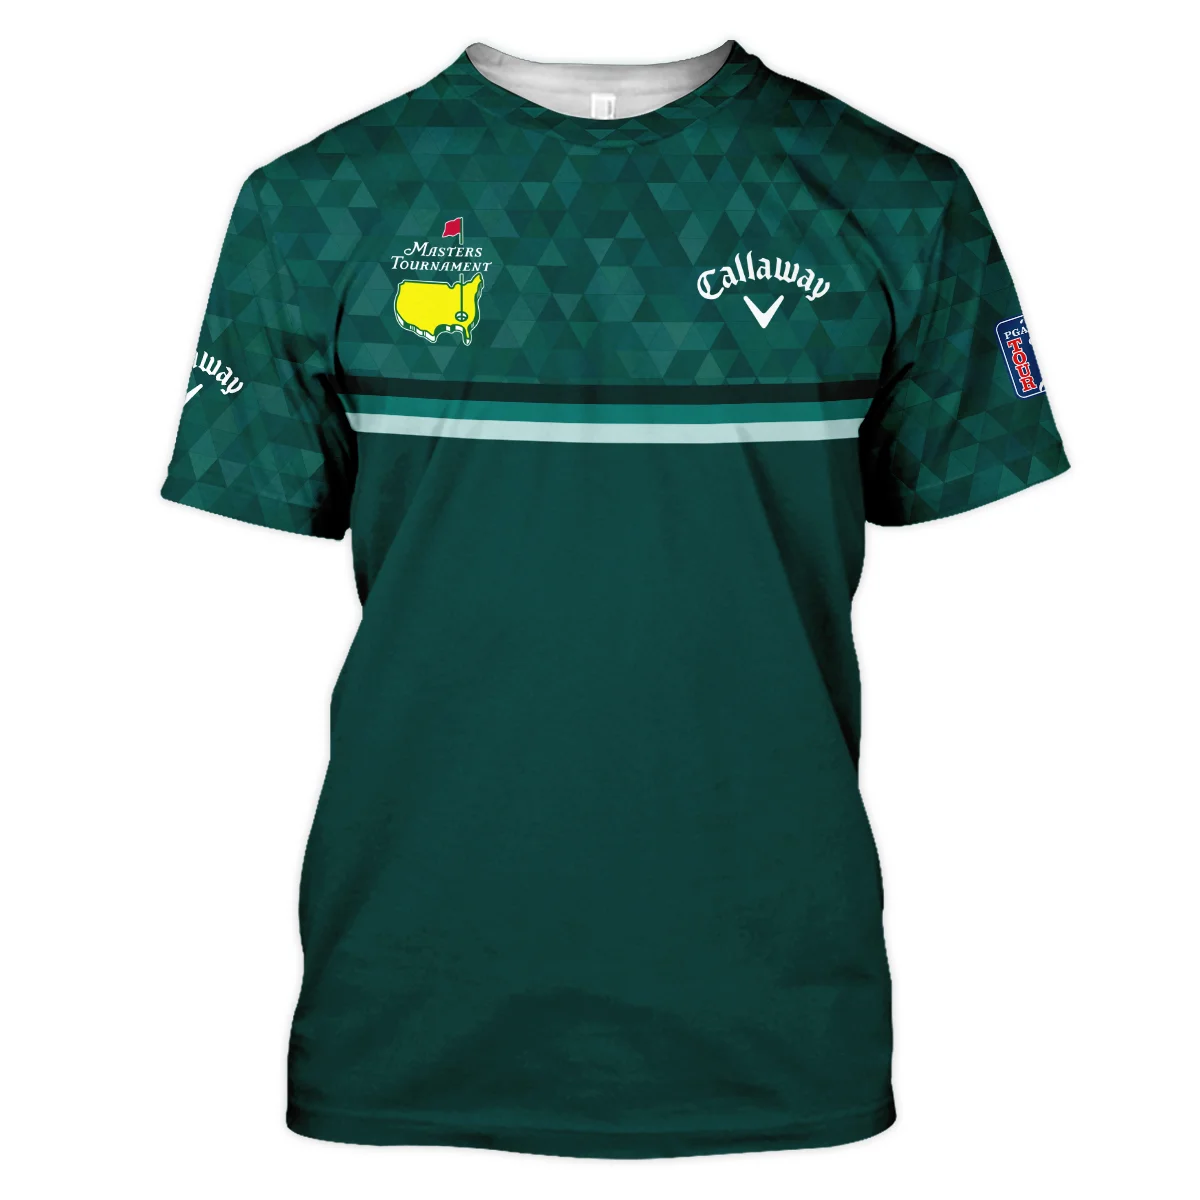 Dark Green Triangle Mosaic Pattern Masters Tournament Callaway Unisex T-Shirt Style Classic T-Shirt